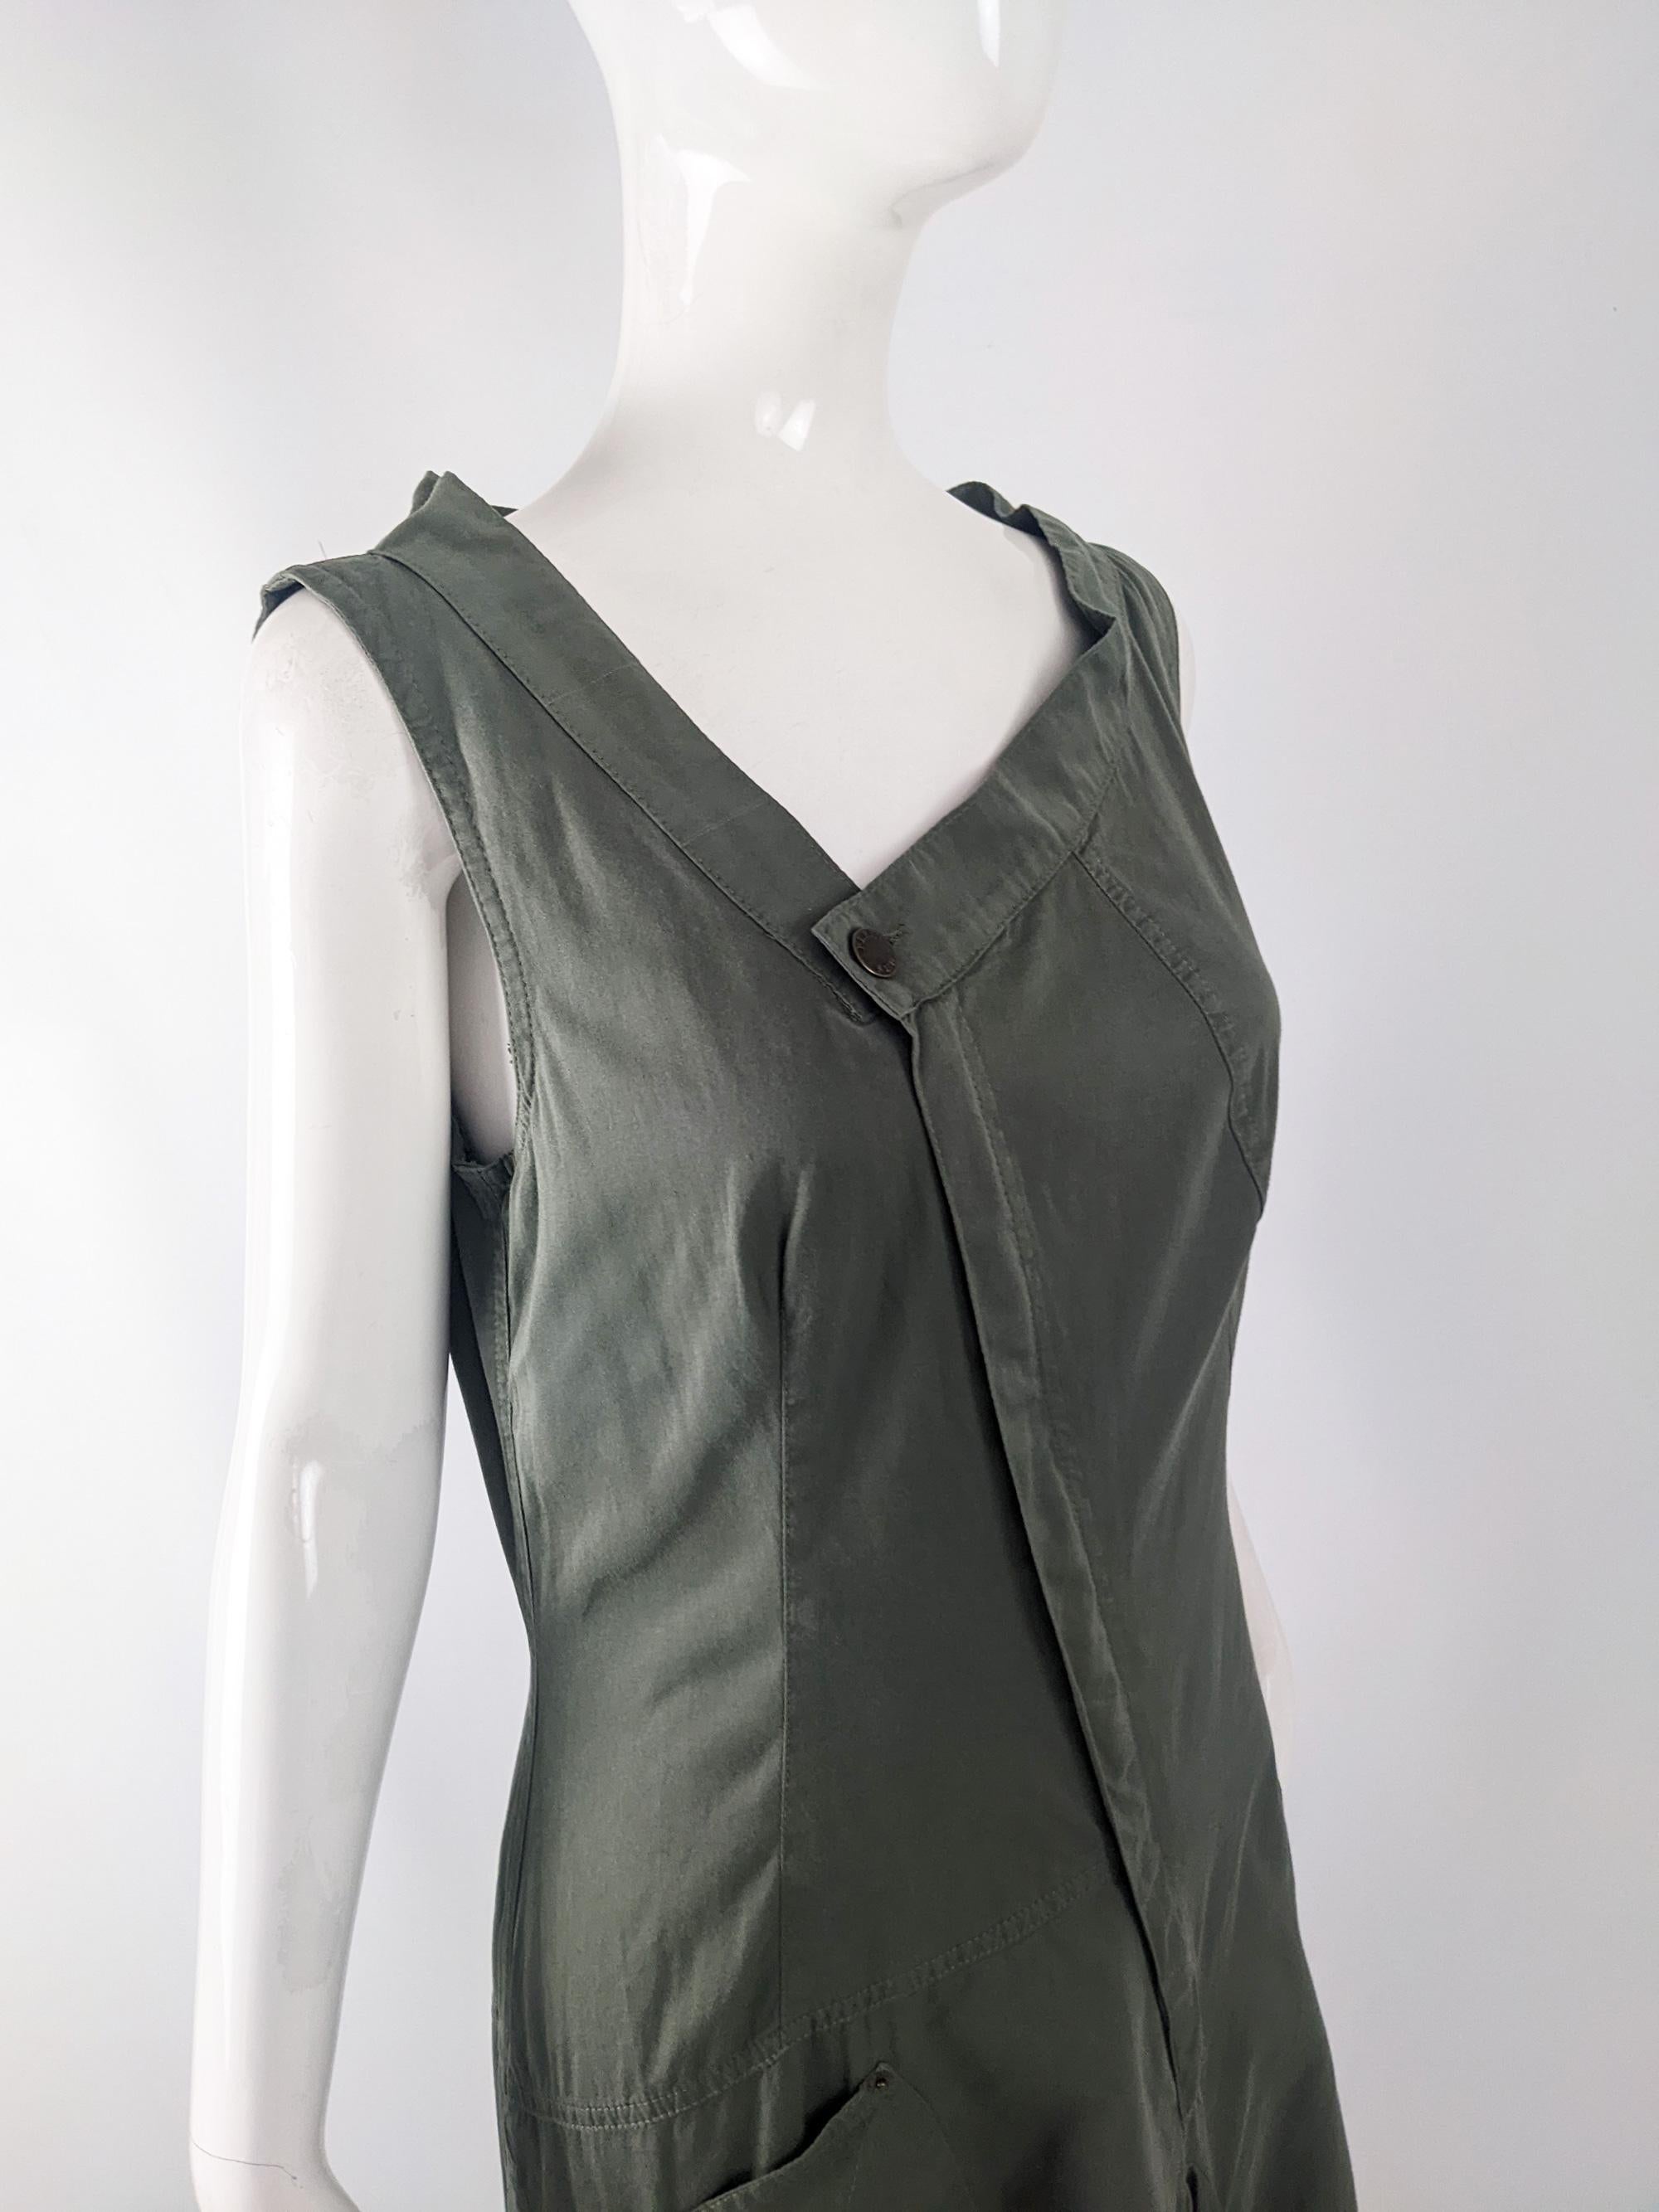 Plein Sud Jeans Vintage Khaki Green Asymmetric Avant Garde Dress, 1990s For Sale 1